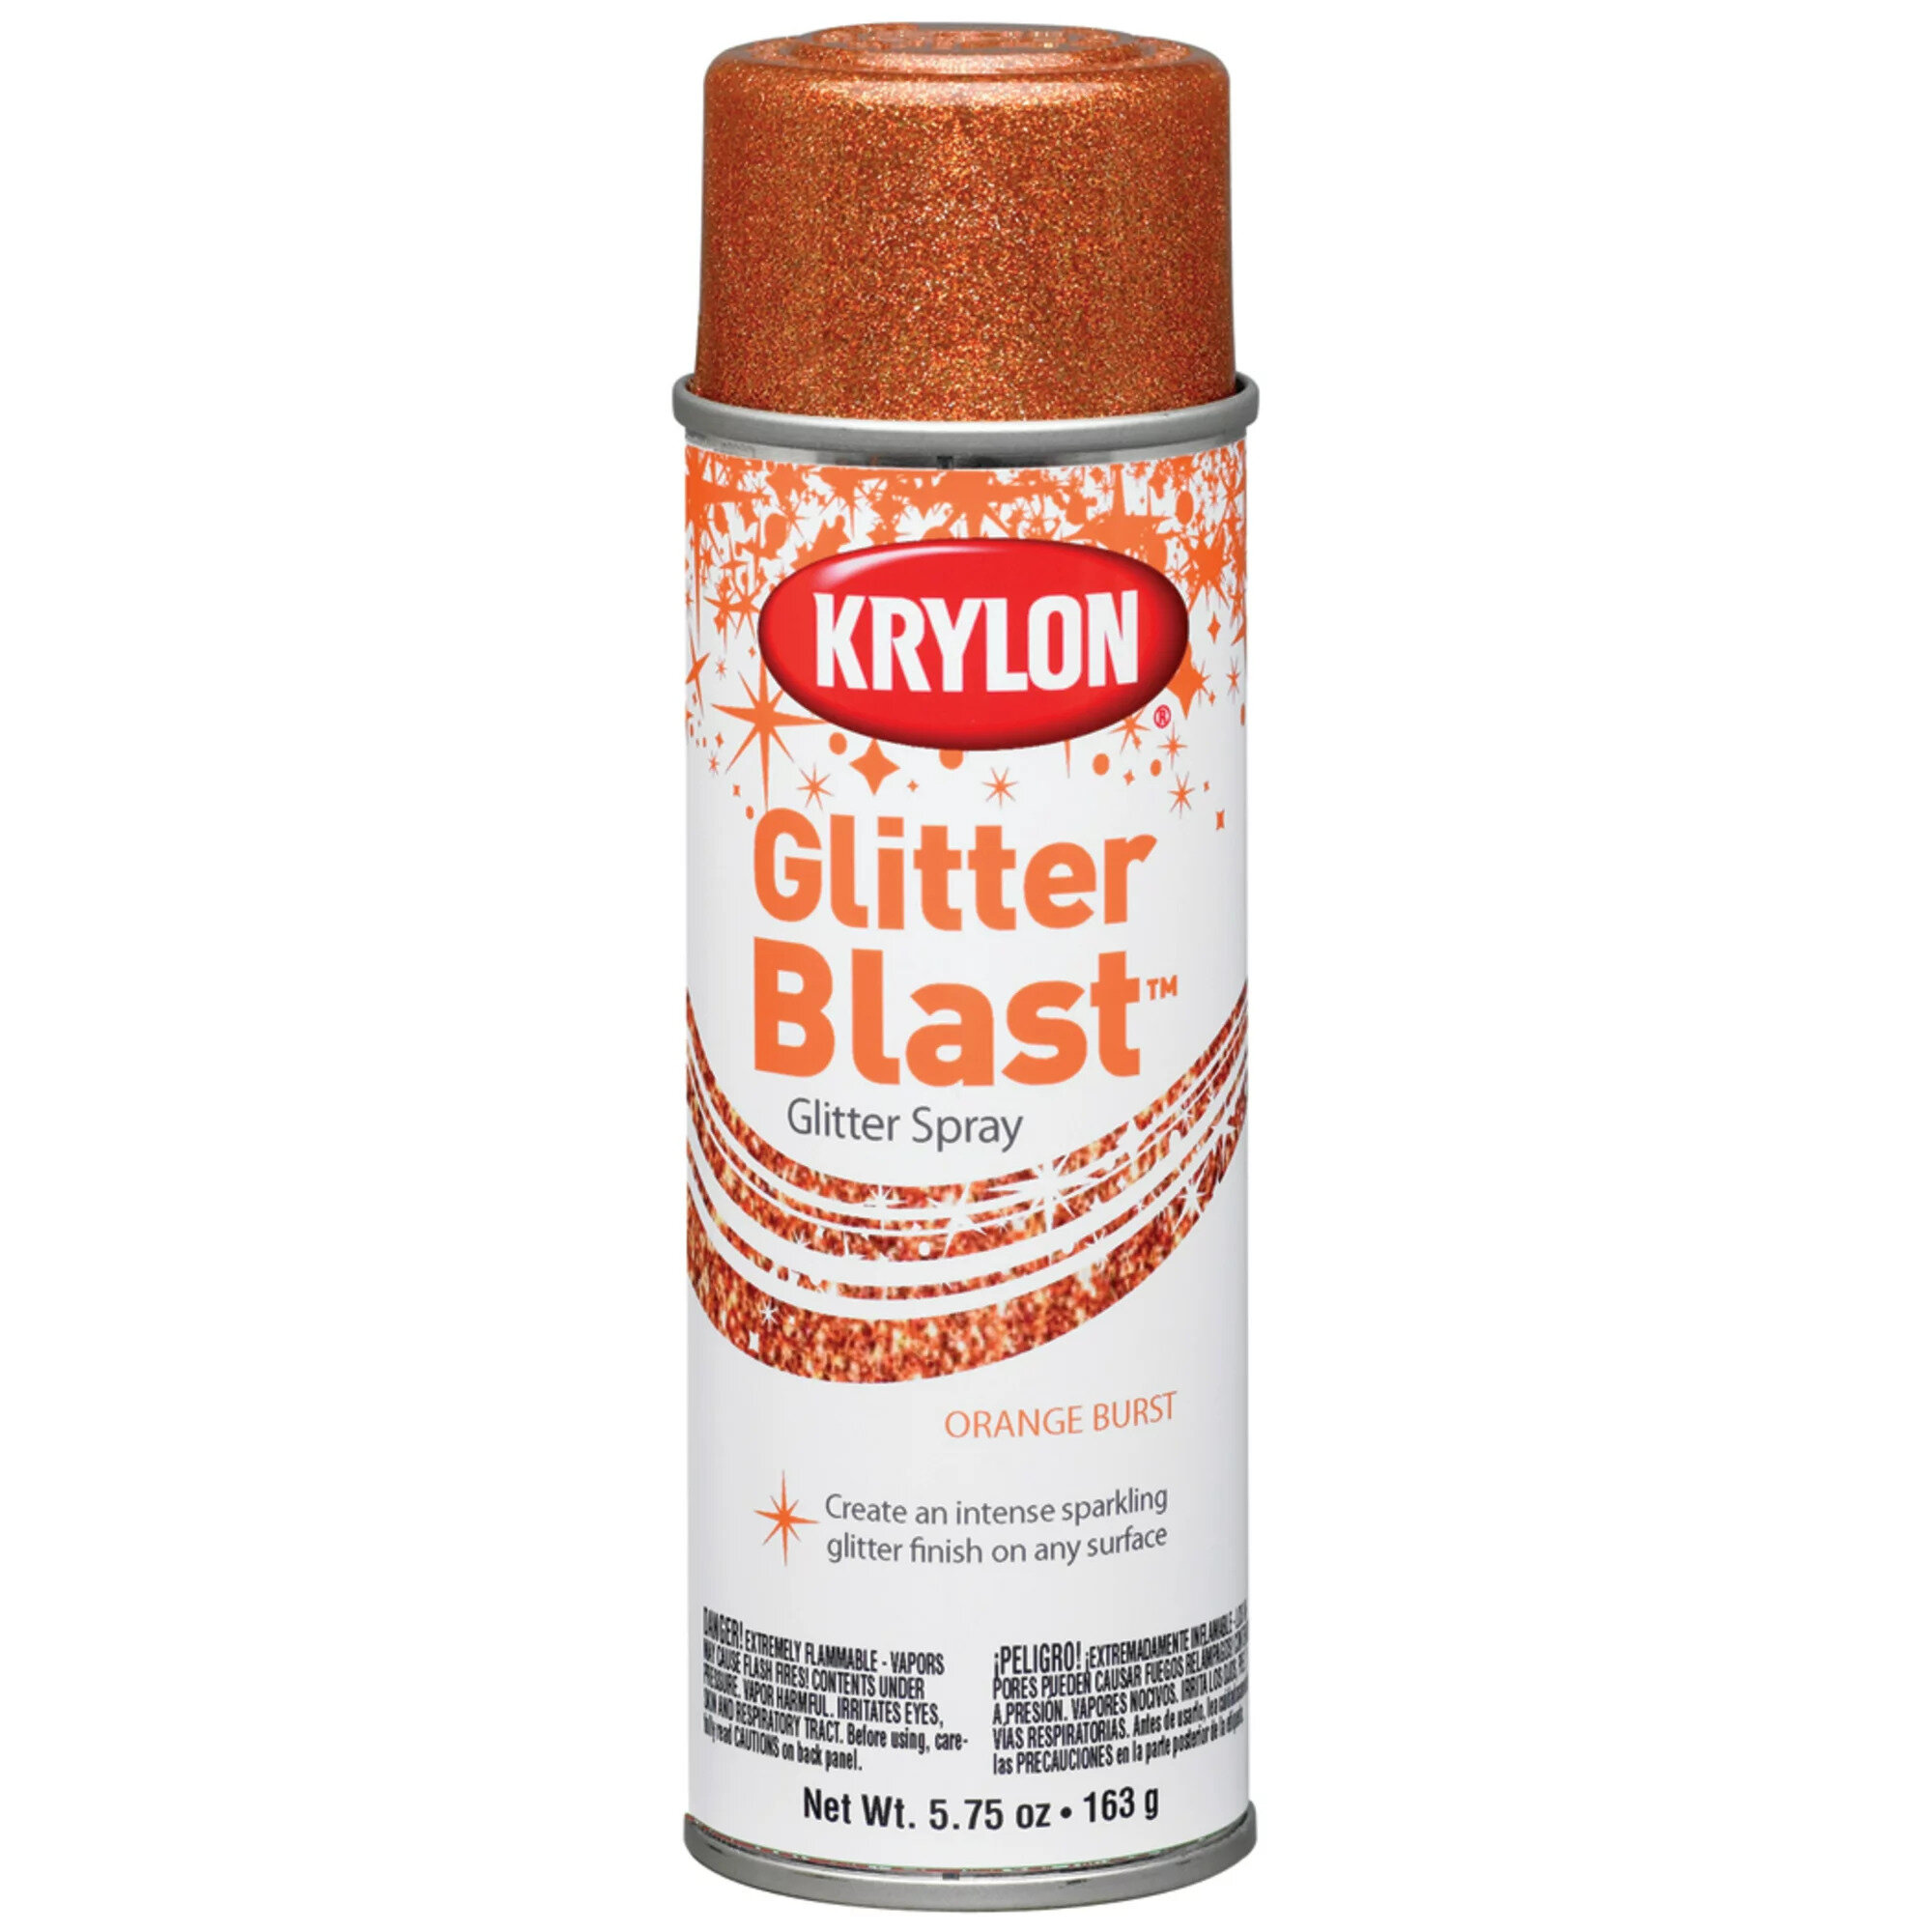 Krylon Glitter Blast Spray - аэрозольный баллончик с блестками "3D Глиттер"